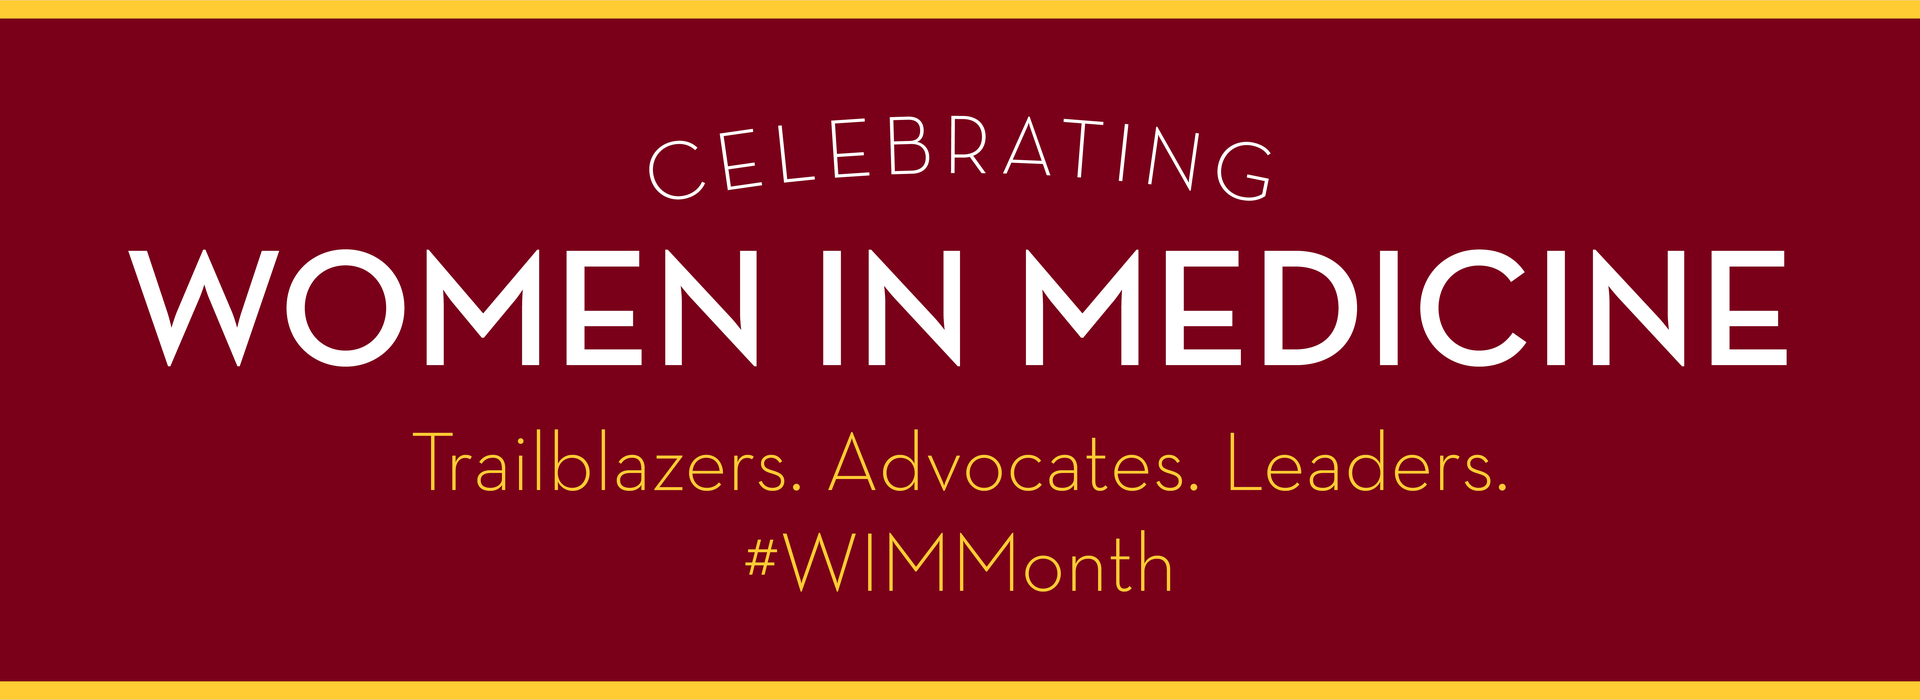 Celebrating Women in Medicine #WIMMonth